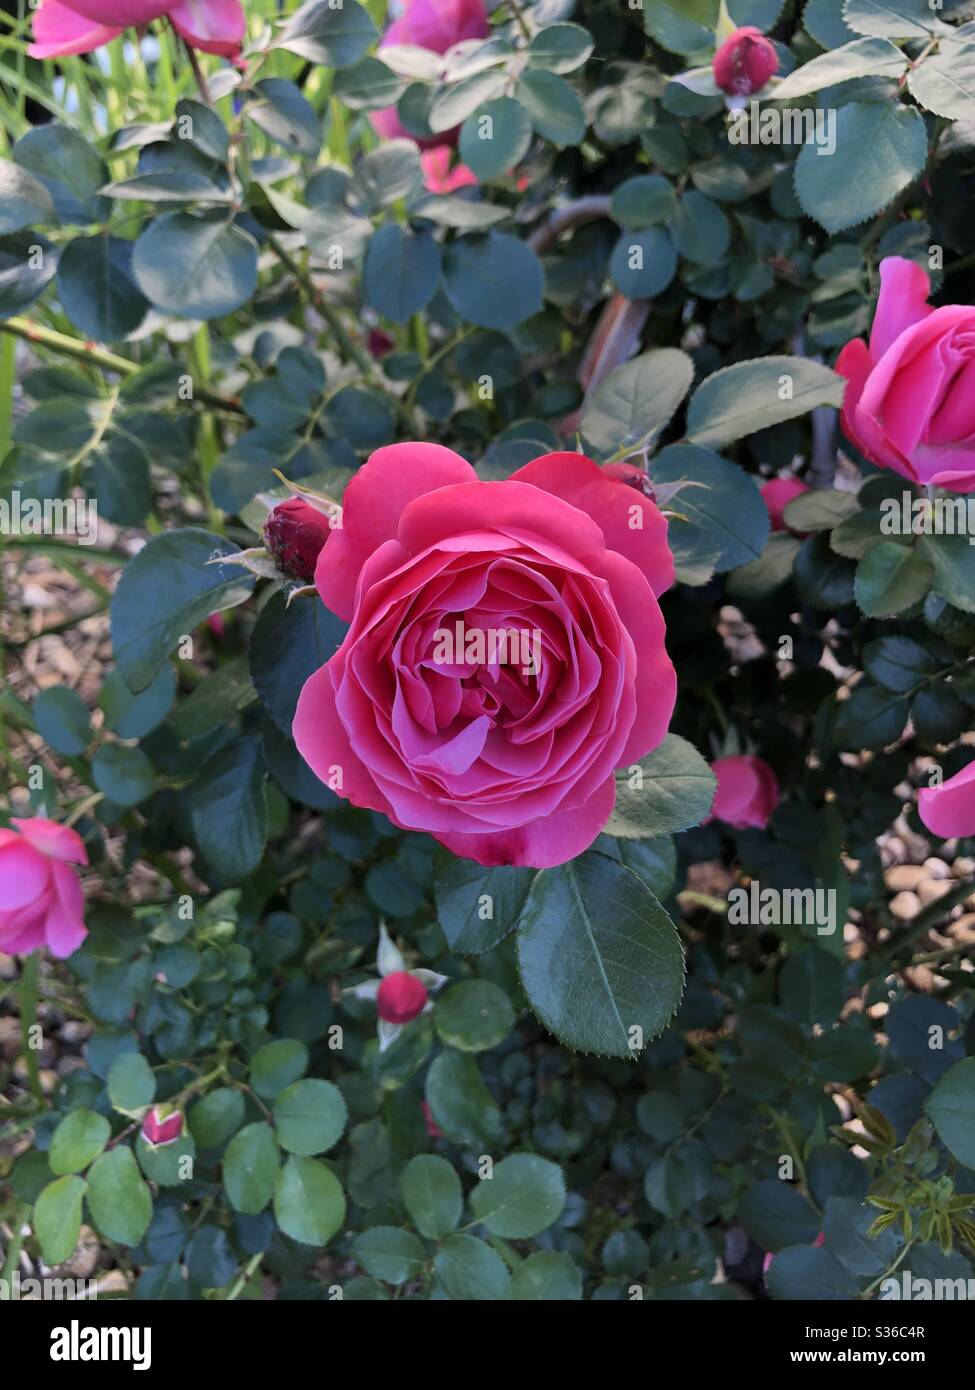 A bright pink garden rose. Stock Photo